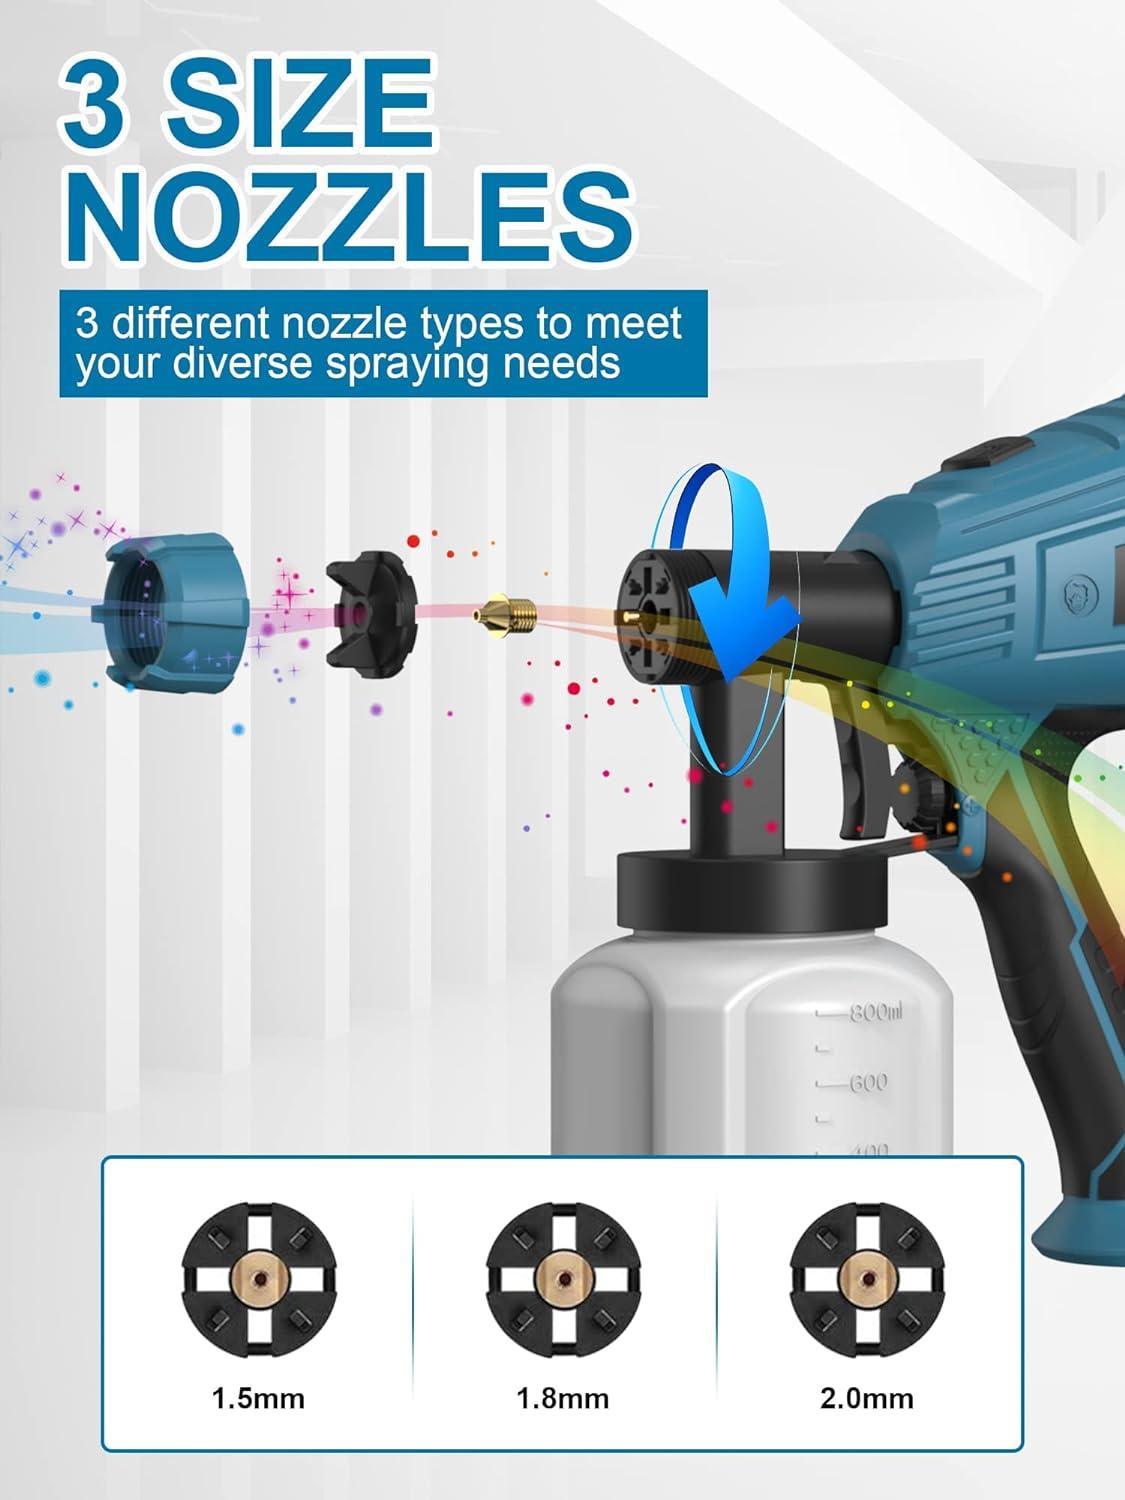 Paint Sprayer,WESCO 500W DIY Electric Spray Gun with 3 Spray Patterns - Massive Discounts